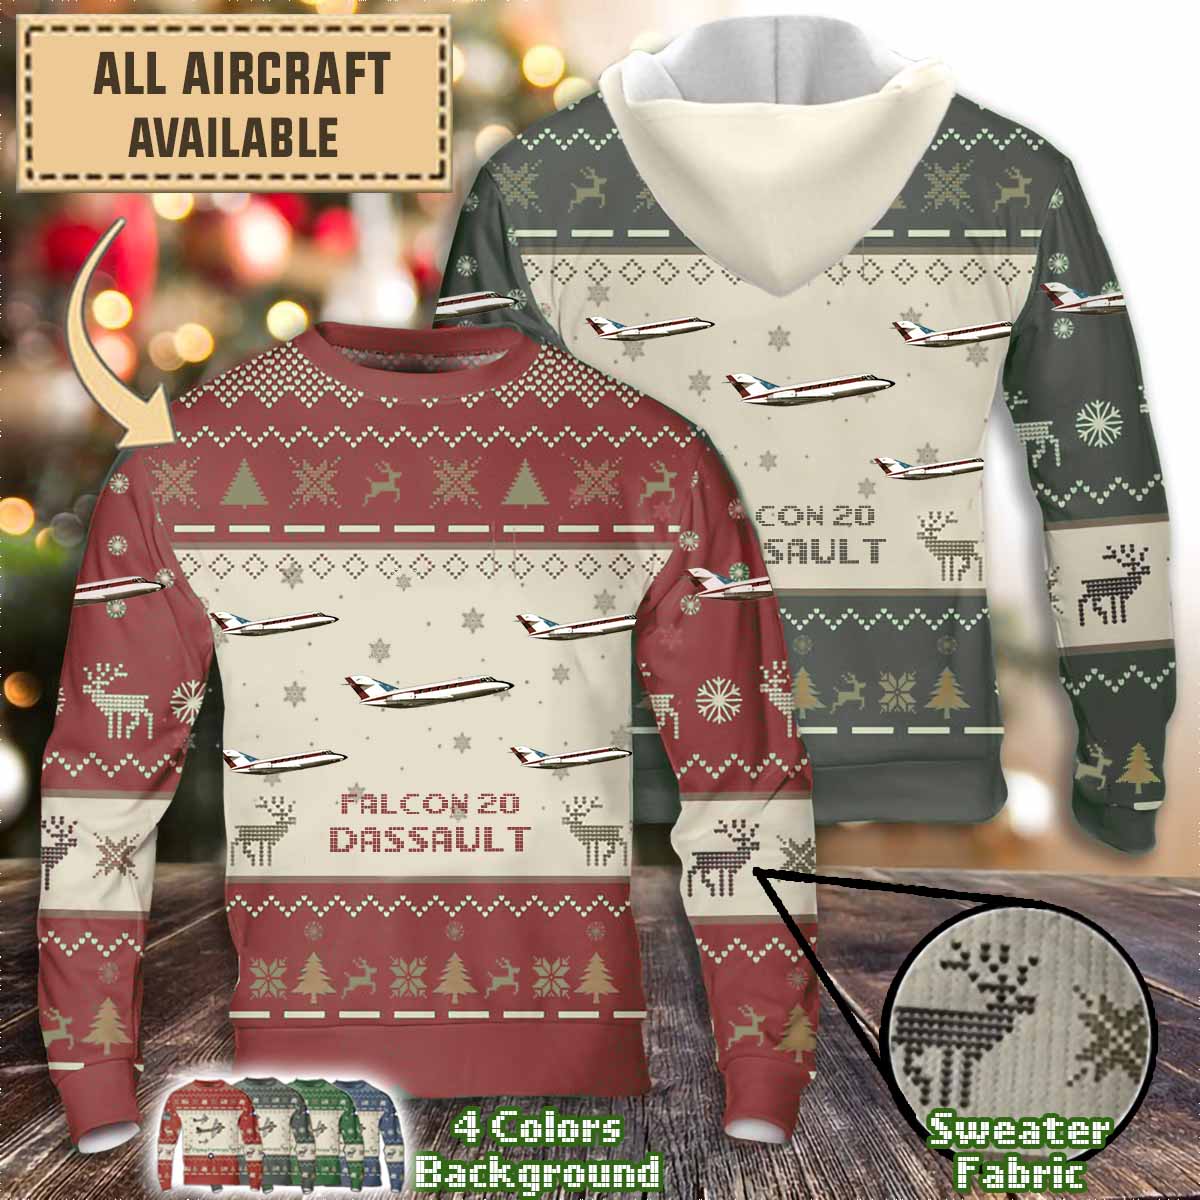 dassault falcon 20aircraft sweater zzb3j